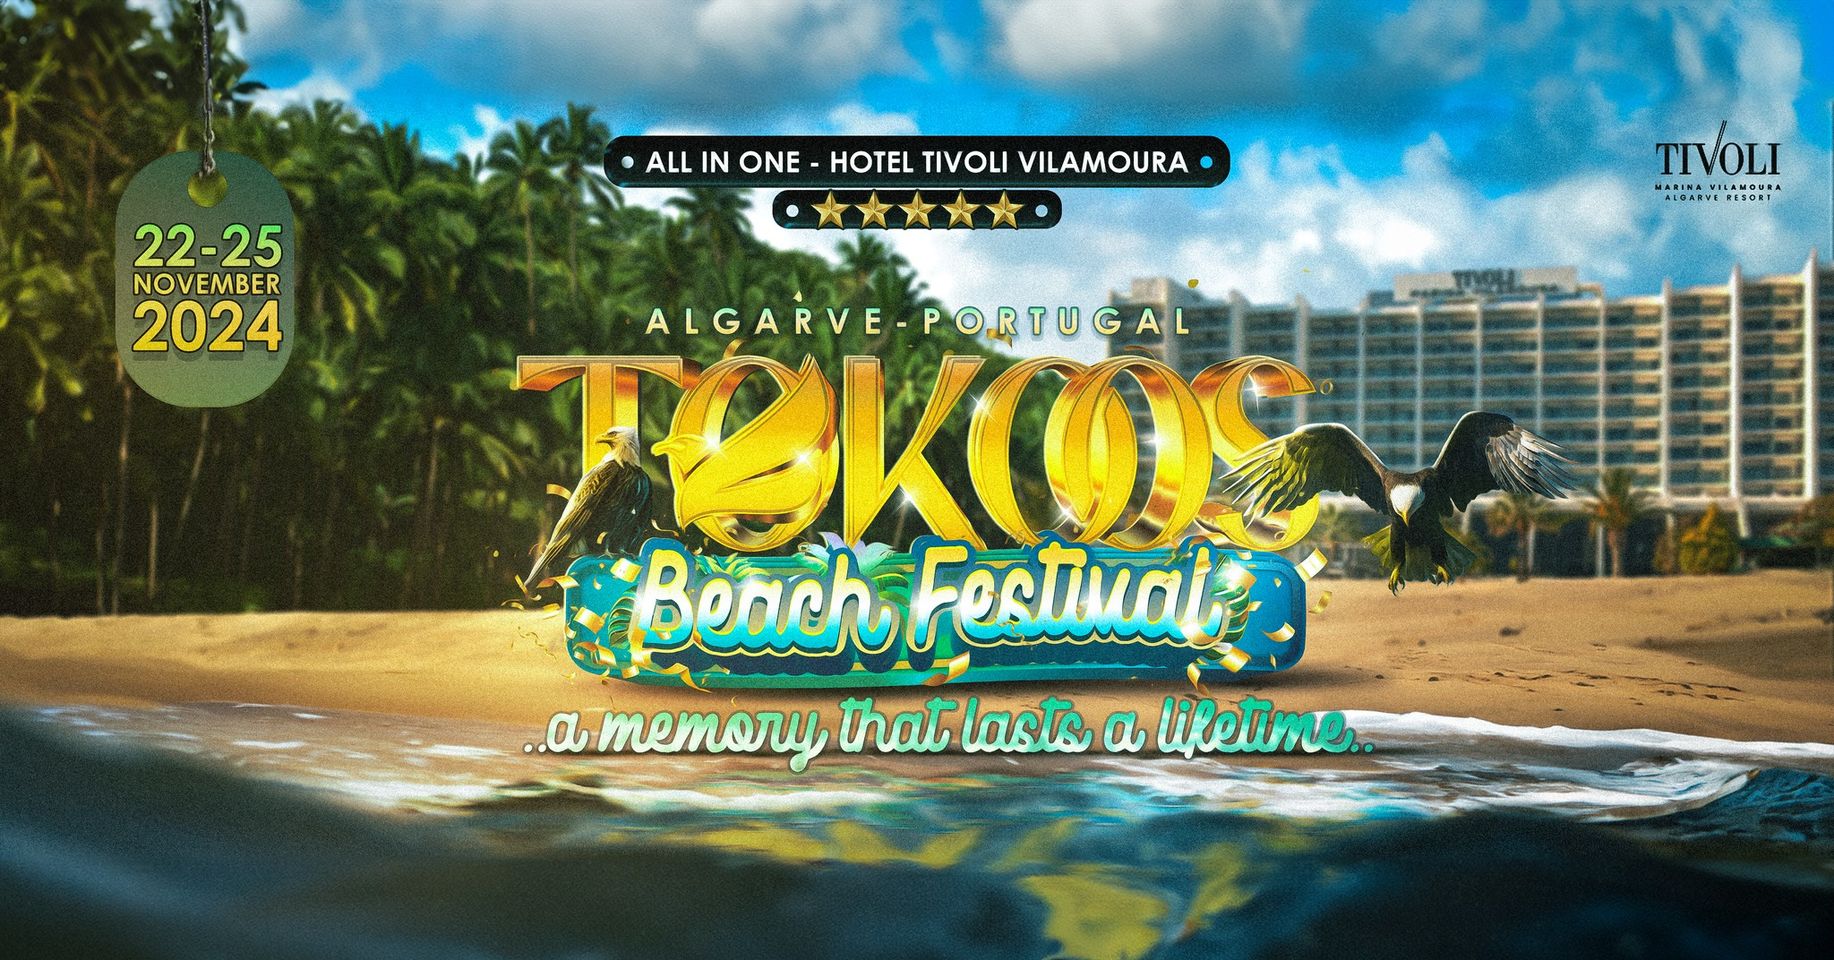 Tokoos Beach Festival 2024 